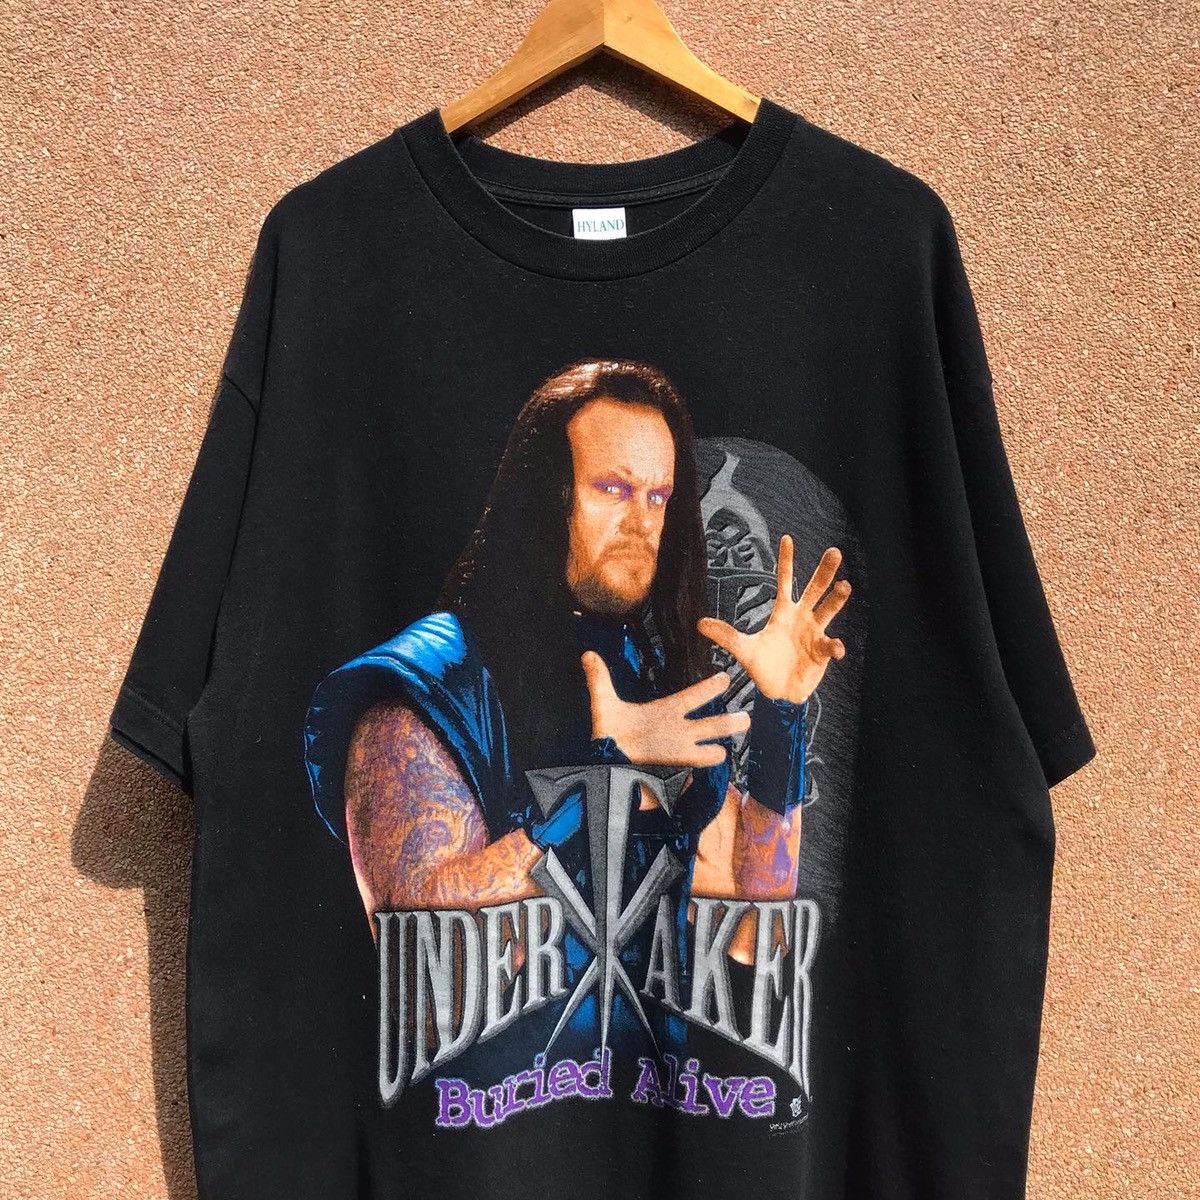 Vintage Vintage 1998 WWF Undertaker Buried Alive Tee Size US XL / EU 56 / 4 - 1 Preview